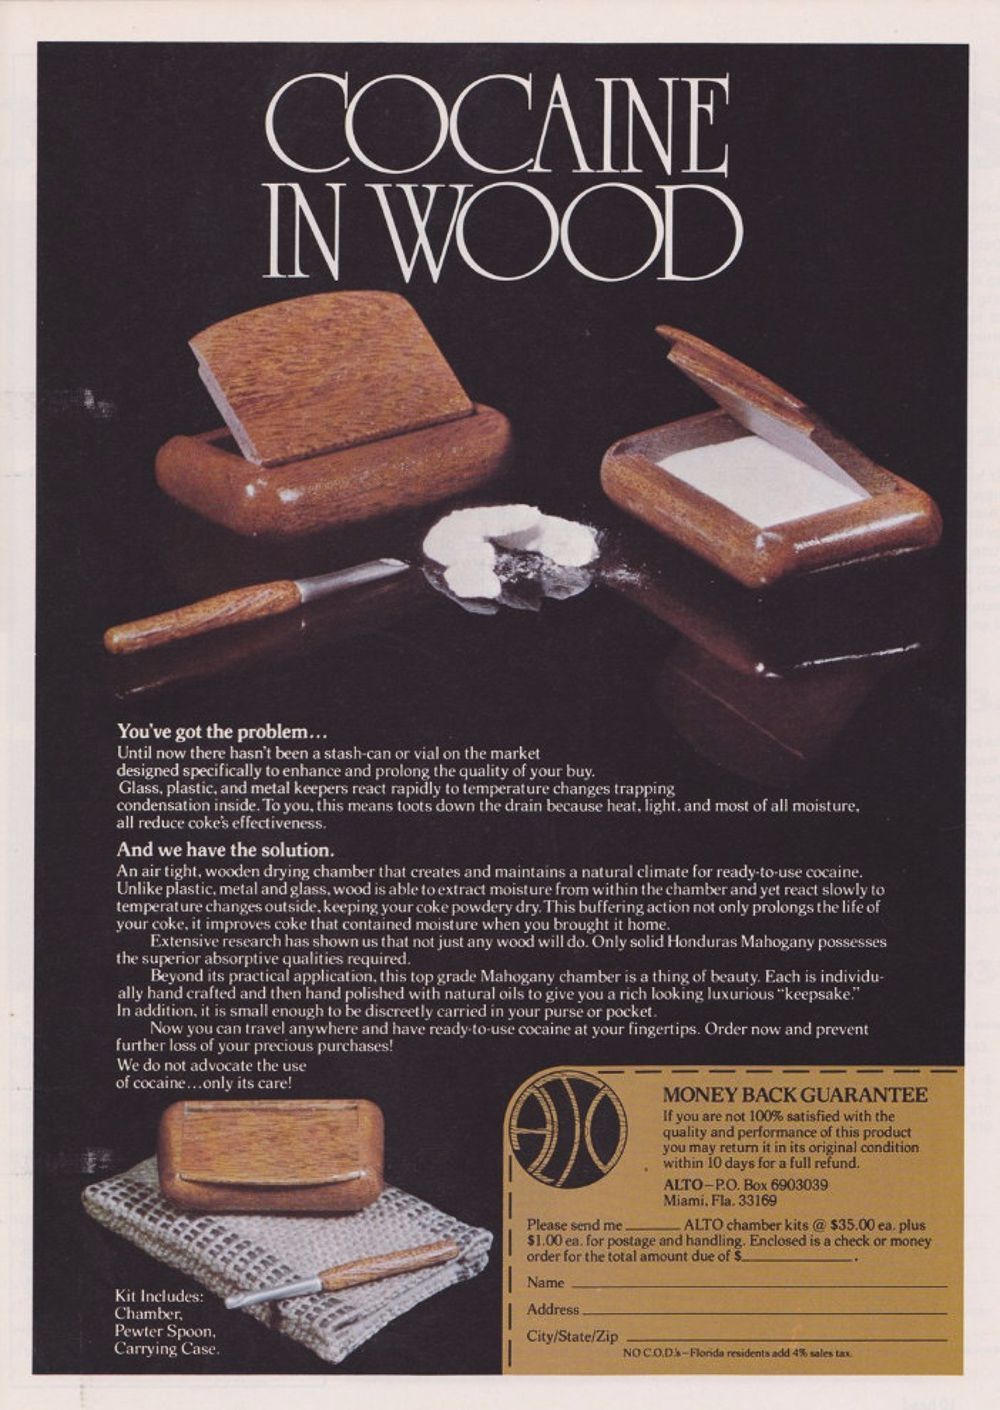 cocaine paraphernalia ads 1970s